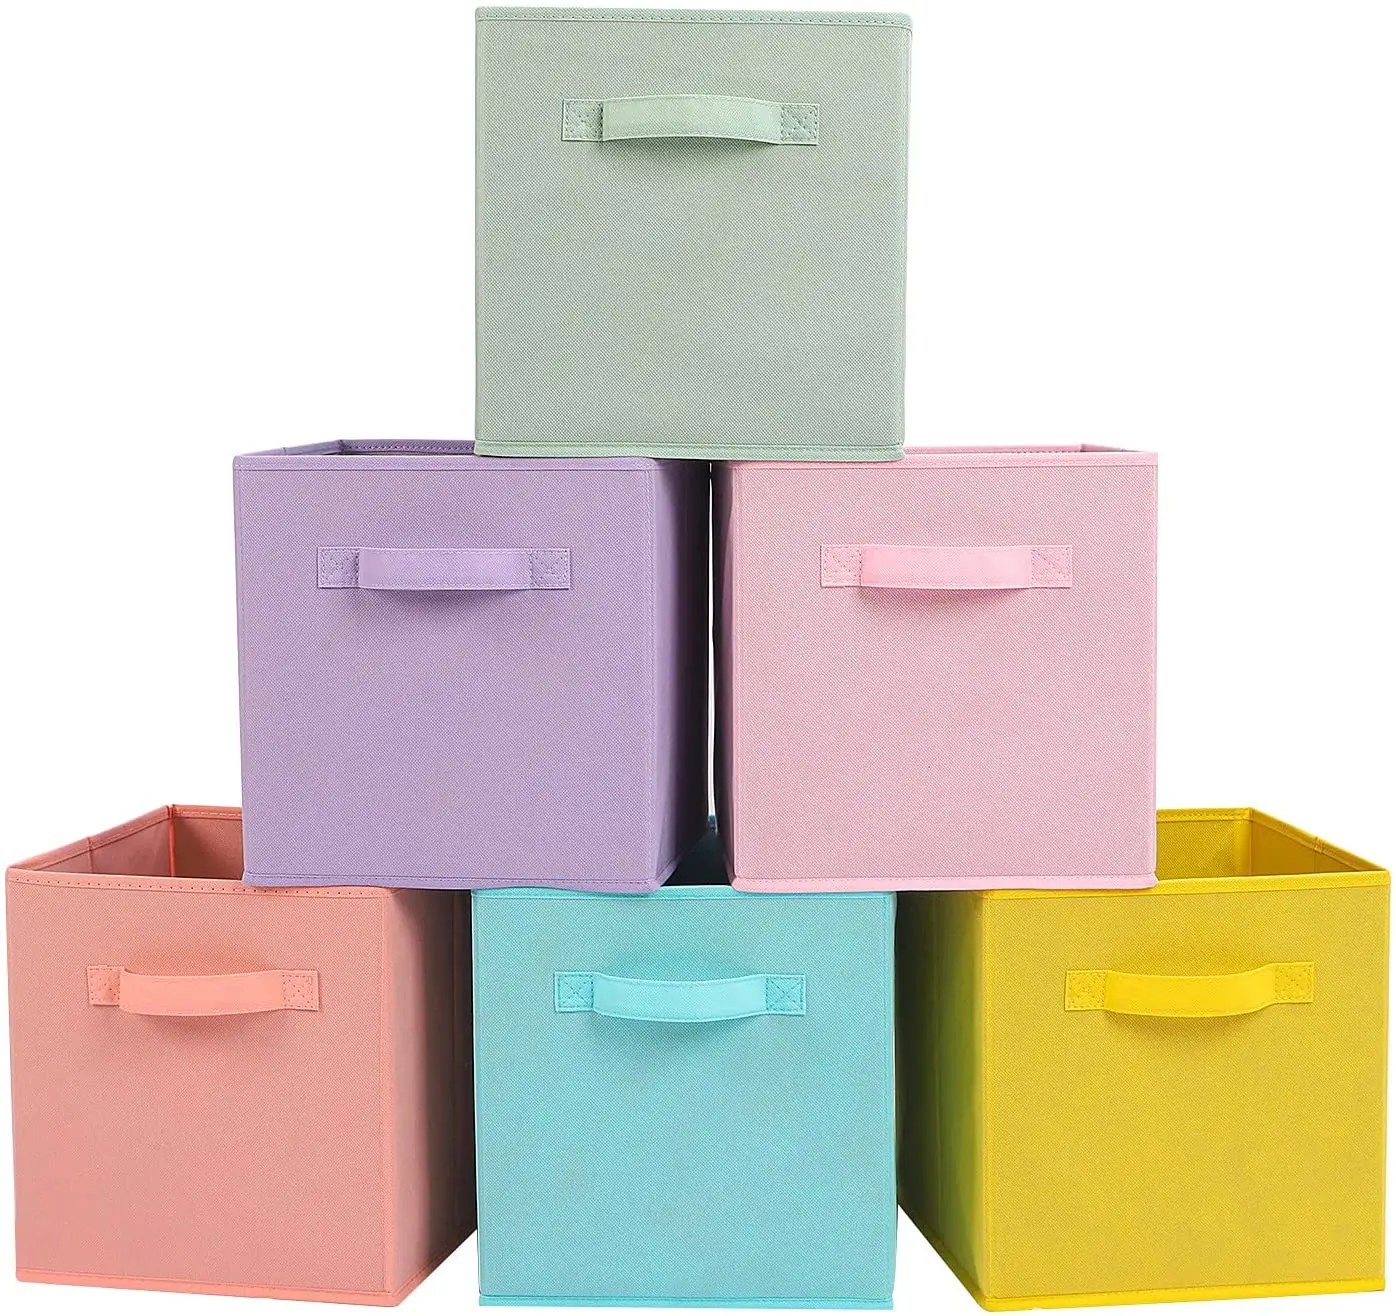 Fabric Storage Bins 6 Pack Fun Colored Durable Storage Cubes with Handles storage organizer box closet organizer